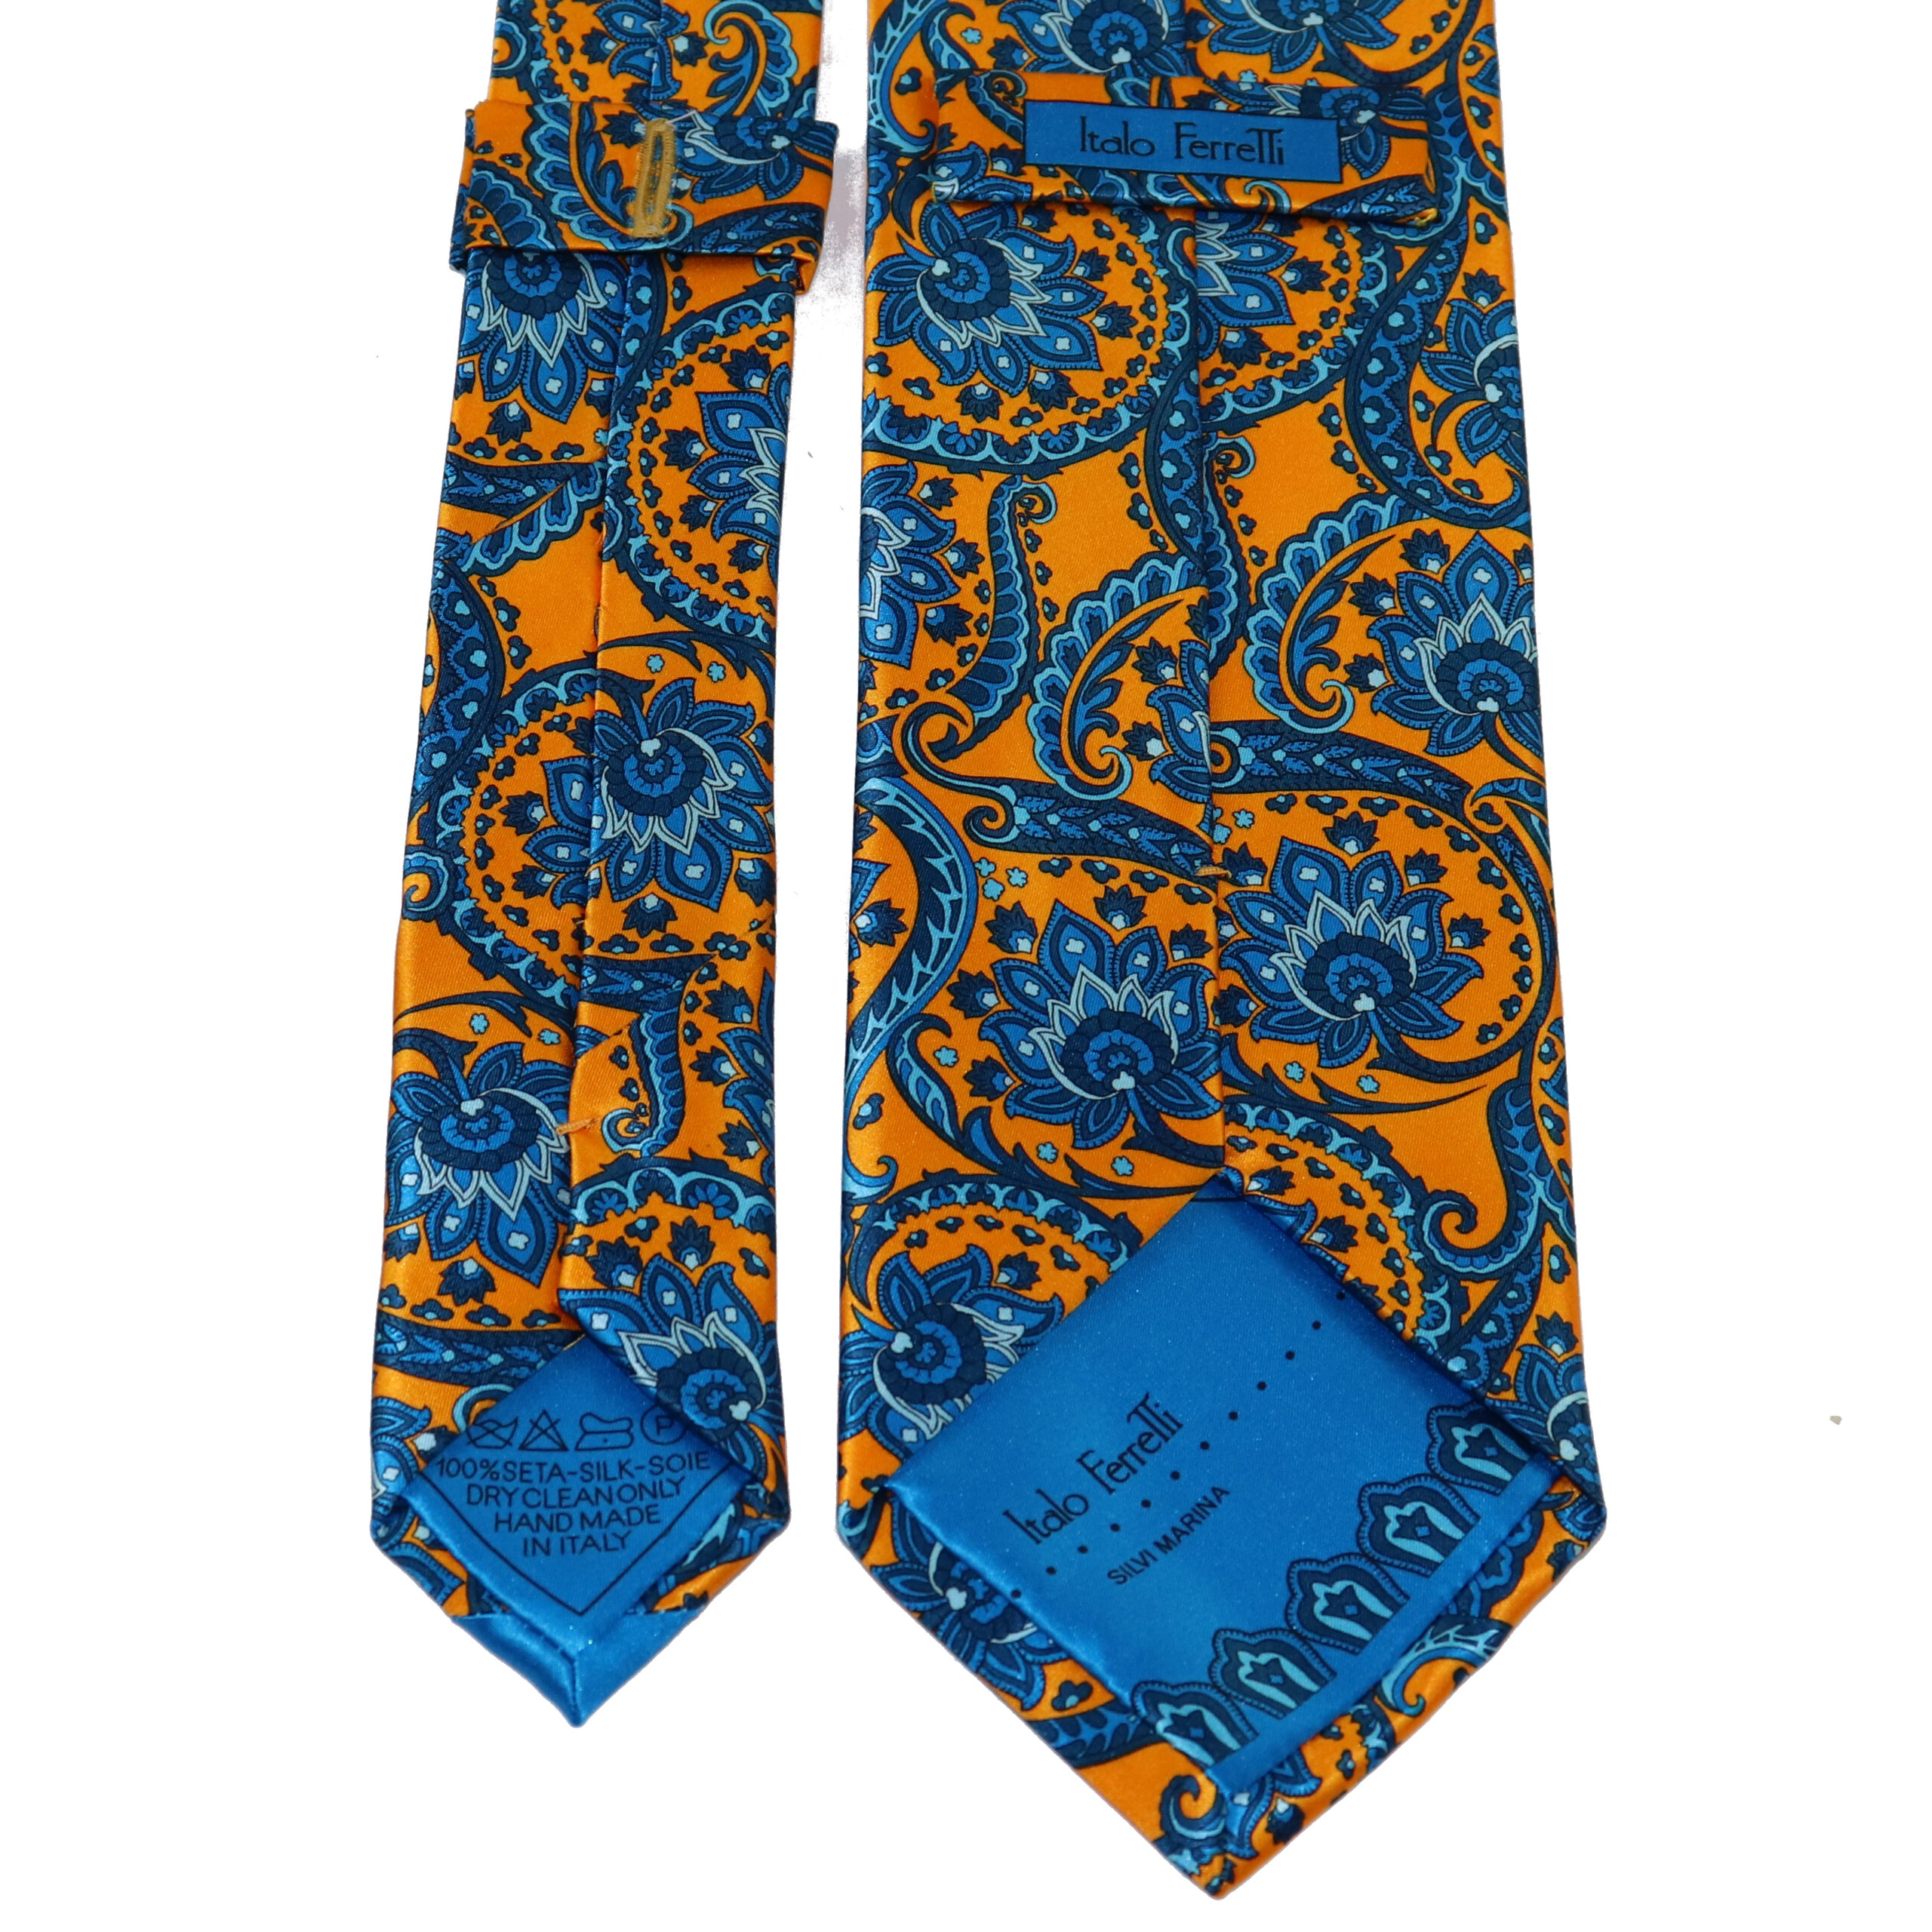 Many Designs Ideal Gift Kirkland Signature 100% Handcraftd Italian Silk Ties 